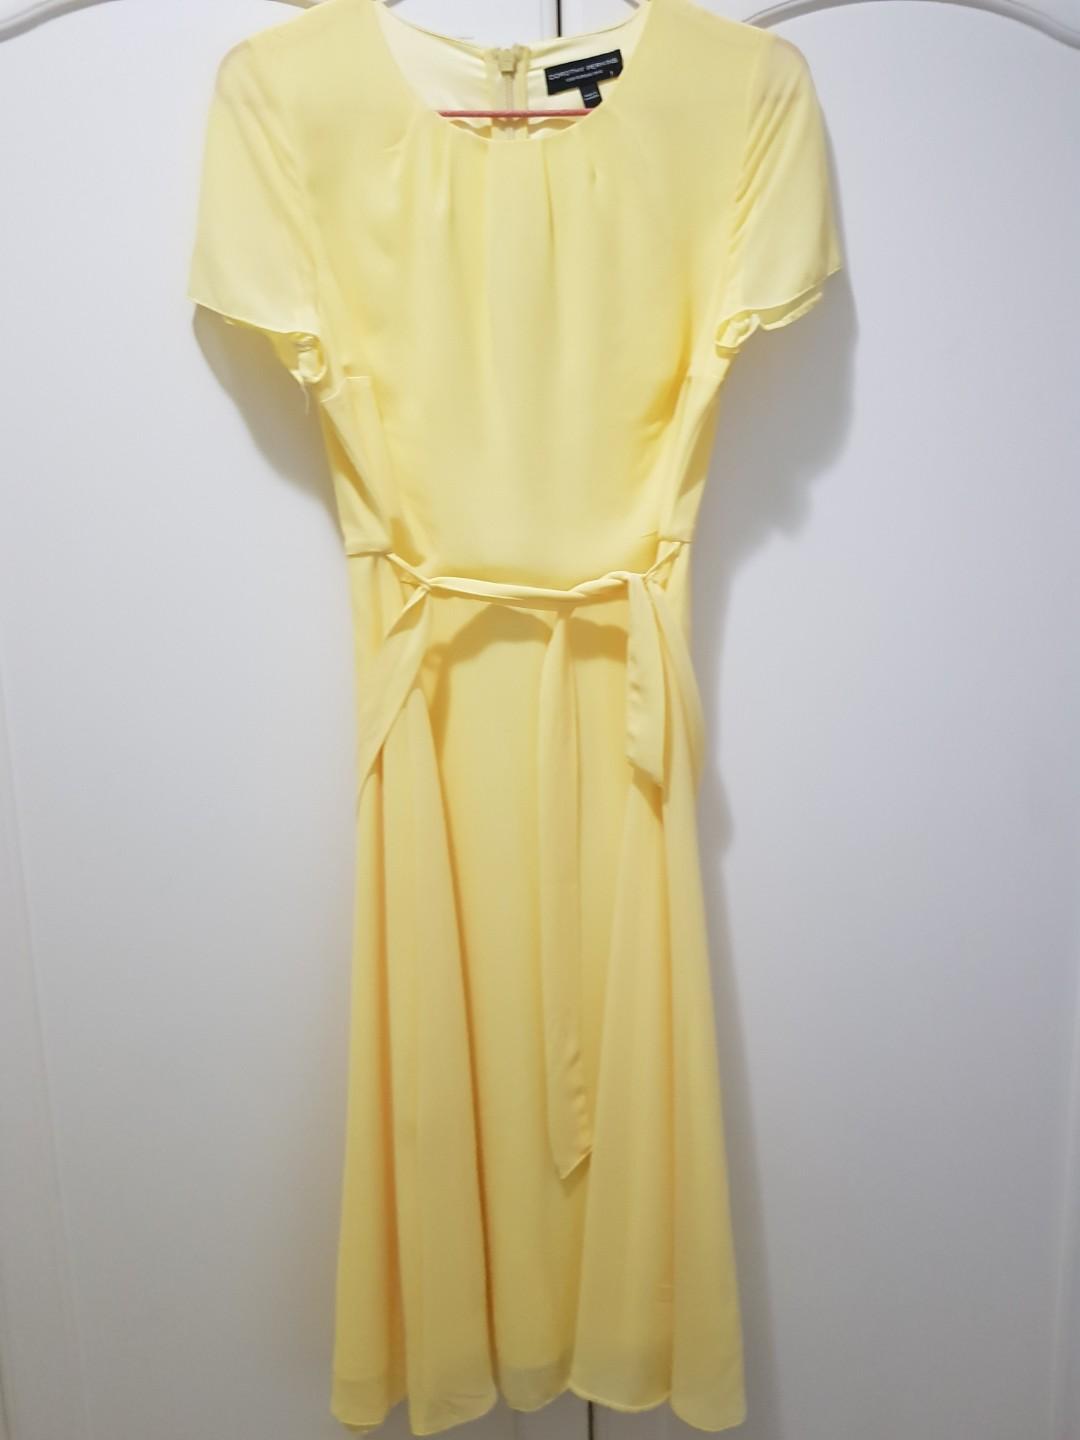 dorothy perkins yellow dress